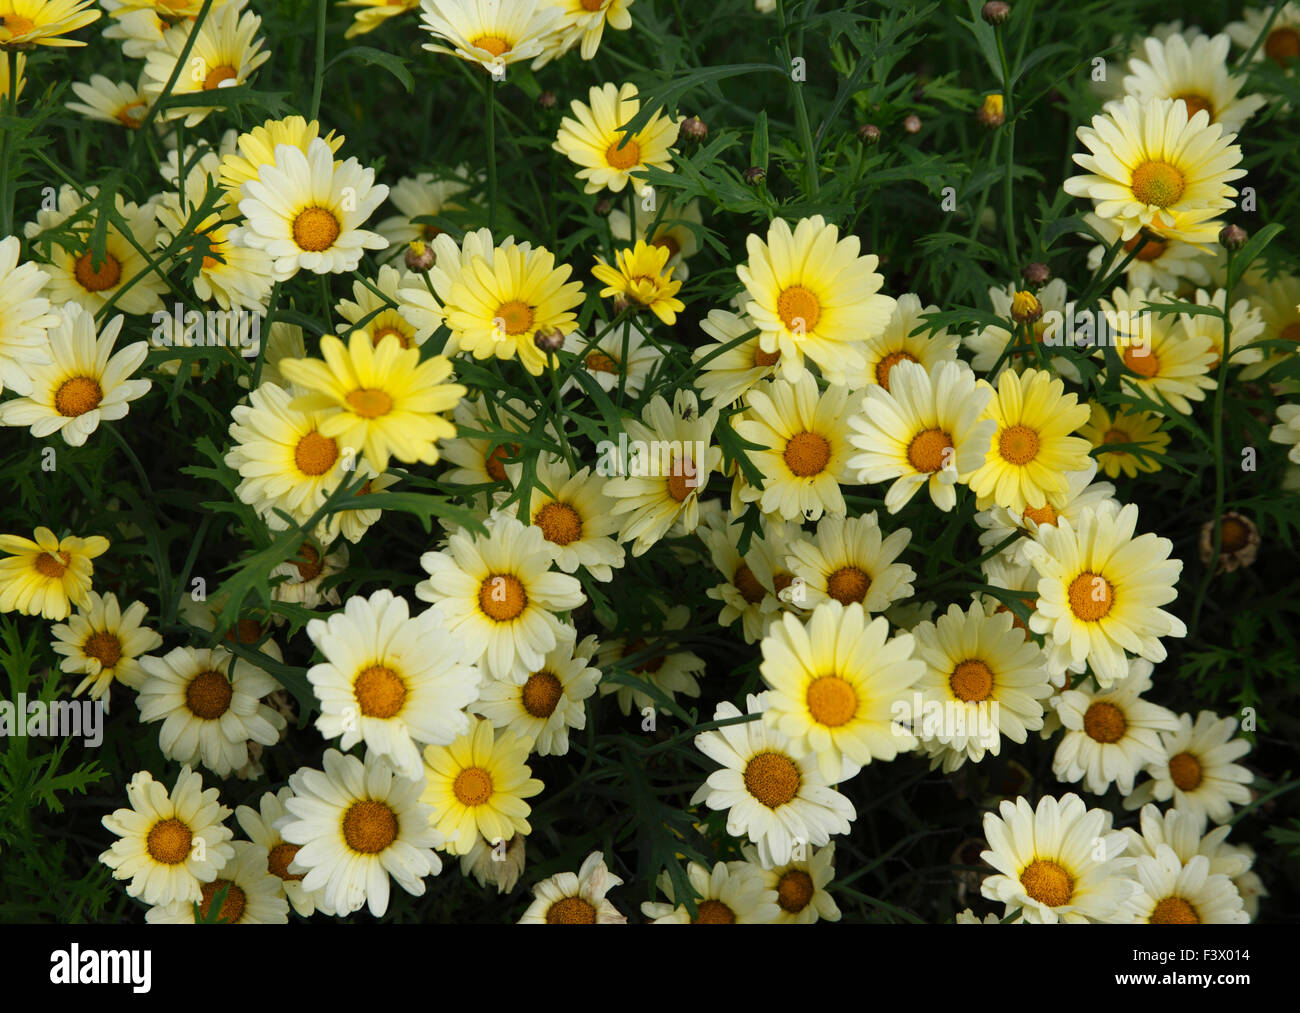 Agryanthemum frutescens 'Jamaica Primrose' close up of flowers Stock Photo